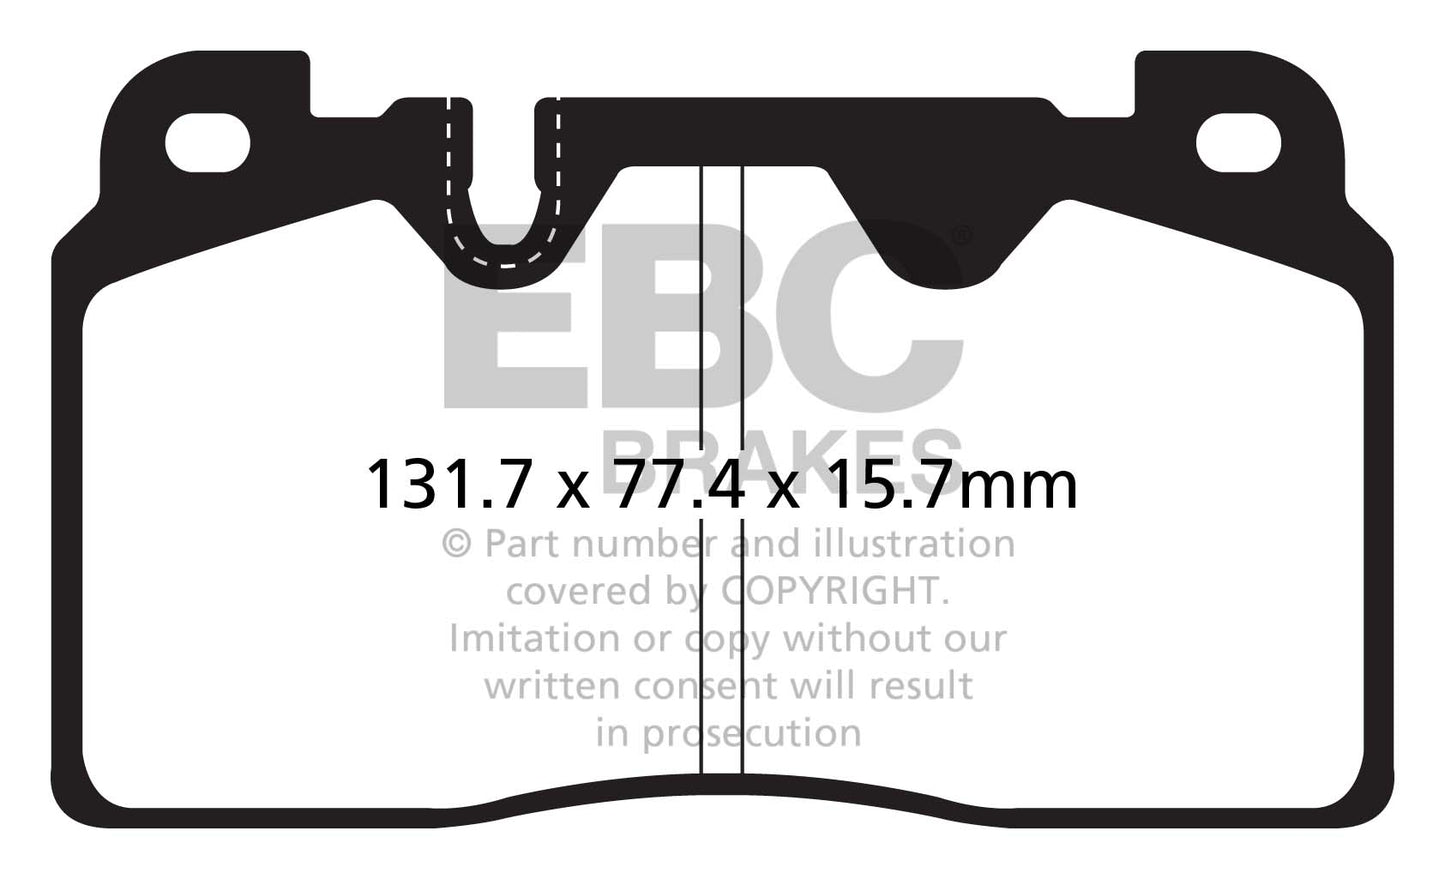 EBC Audi Porsche Yellowstuff 4000 Series Front Sport Brake Pads & Premium OE Replacement Plain Discs Kit - Brembo Caliper (Q5, A6 & A7)